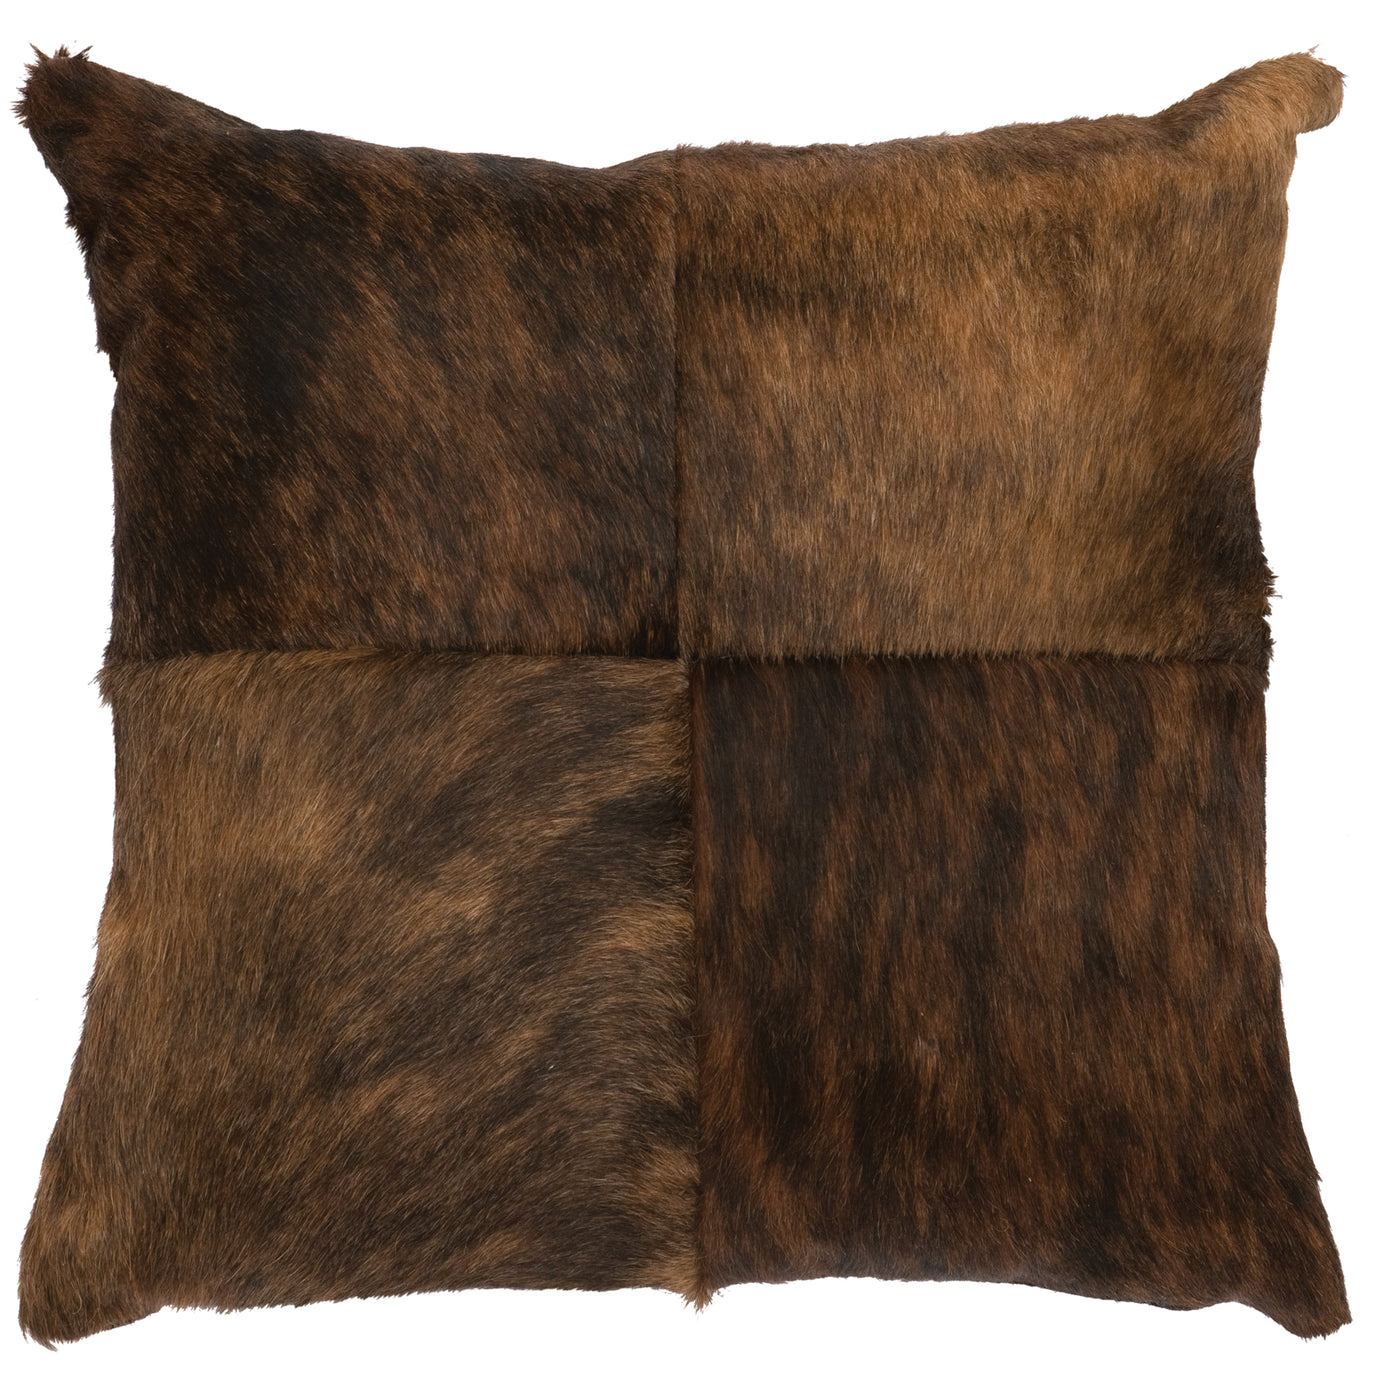 Canvello 深色斑紋皮革枕頭 - 織物背面 - 16 英寸 x 16 英寸